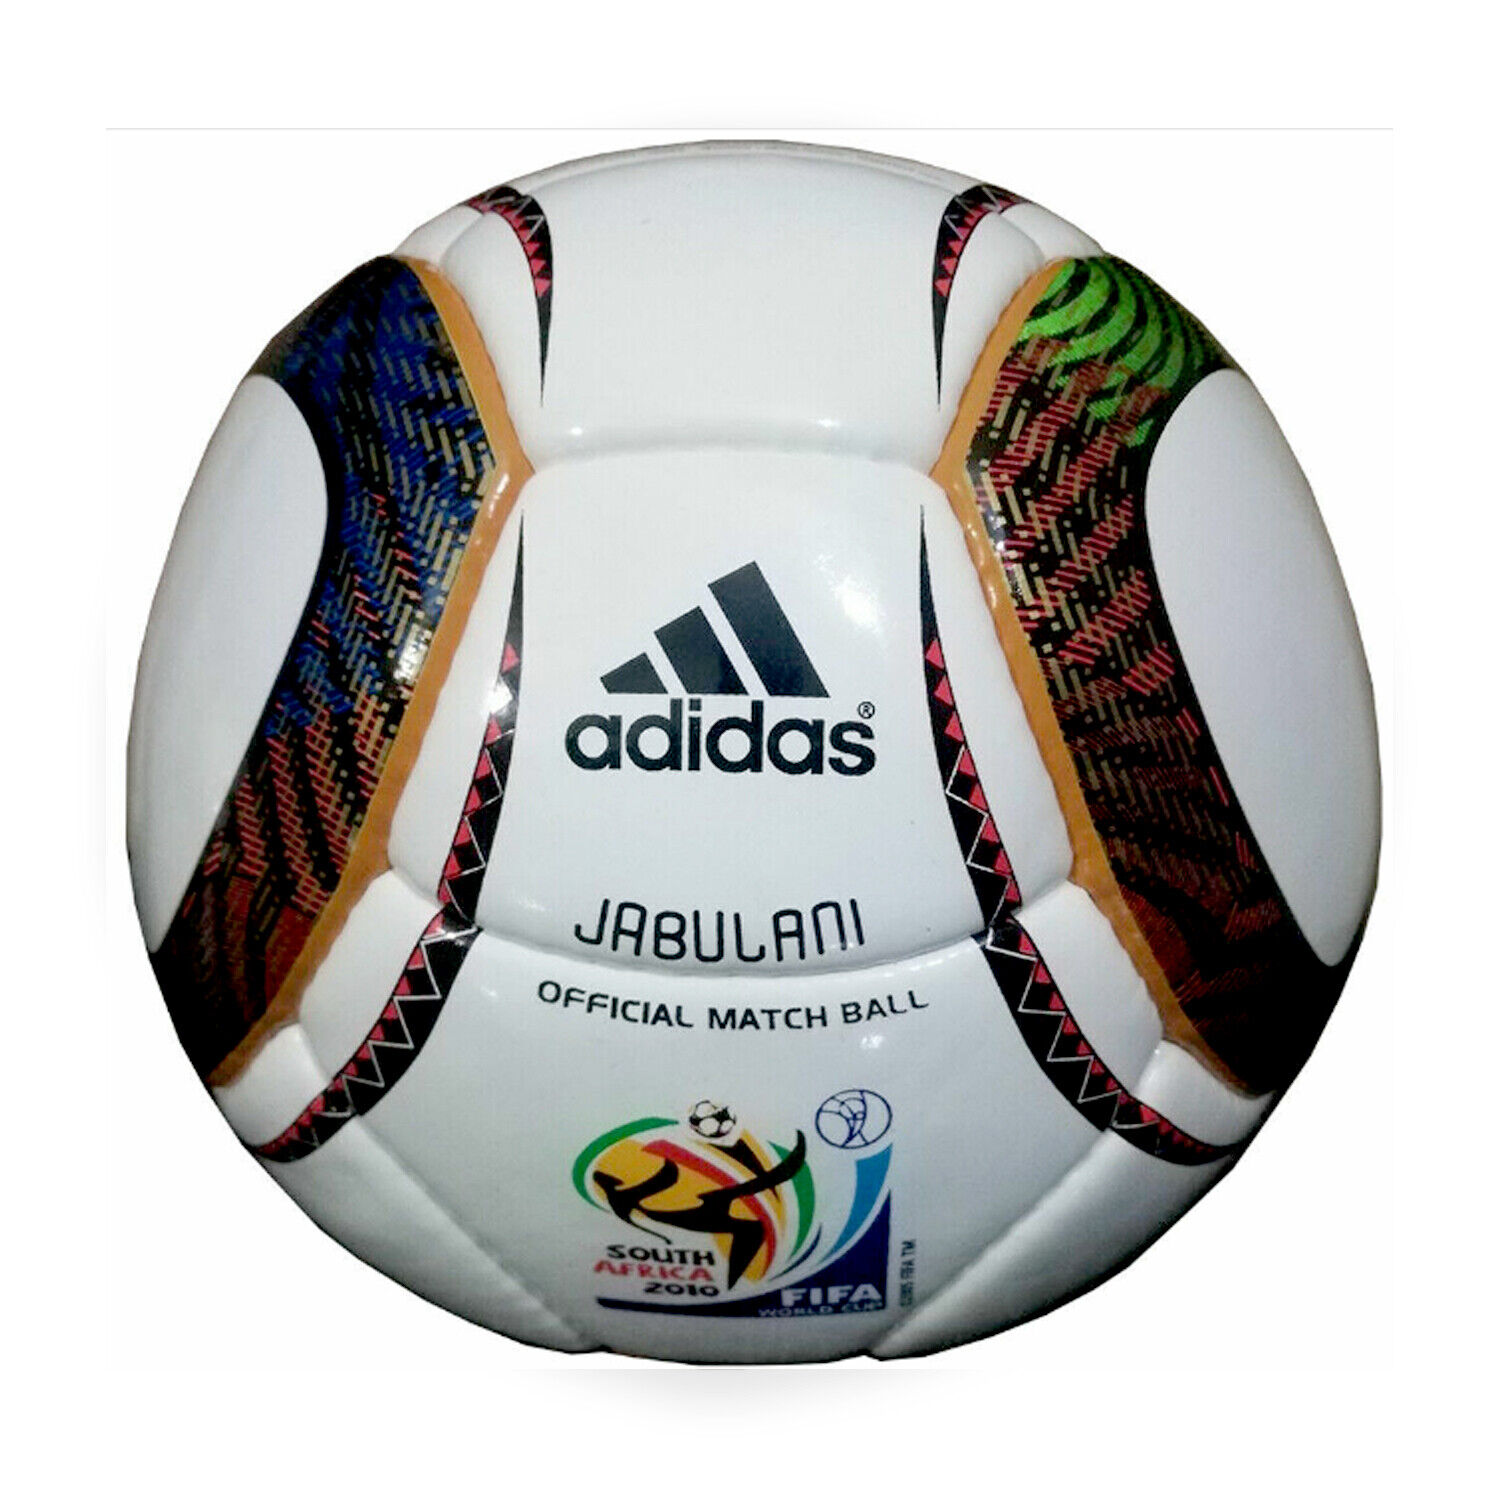 Adidas Jabulani. Official Match Ball. FIFA World Cup 2010